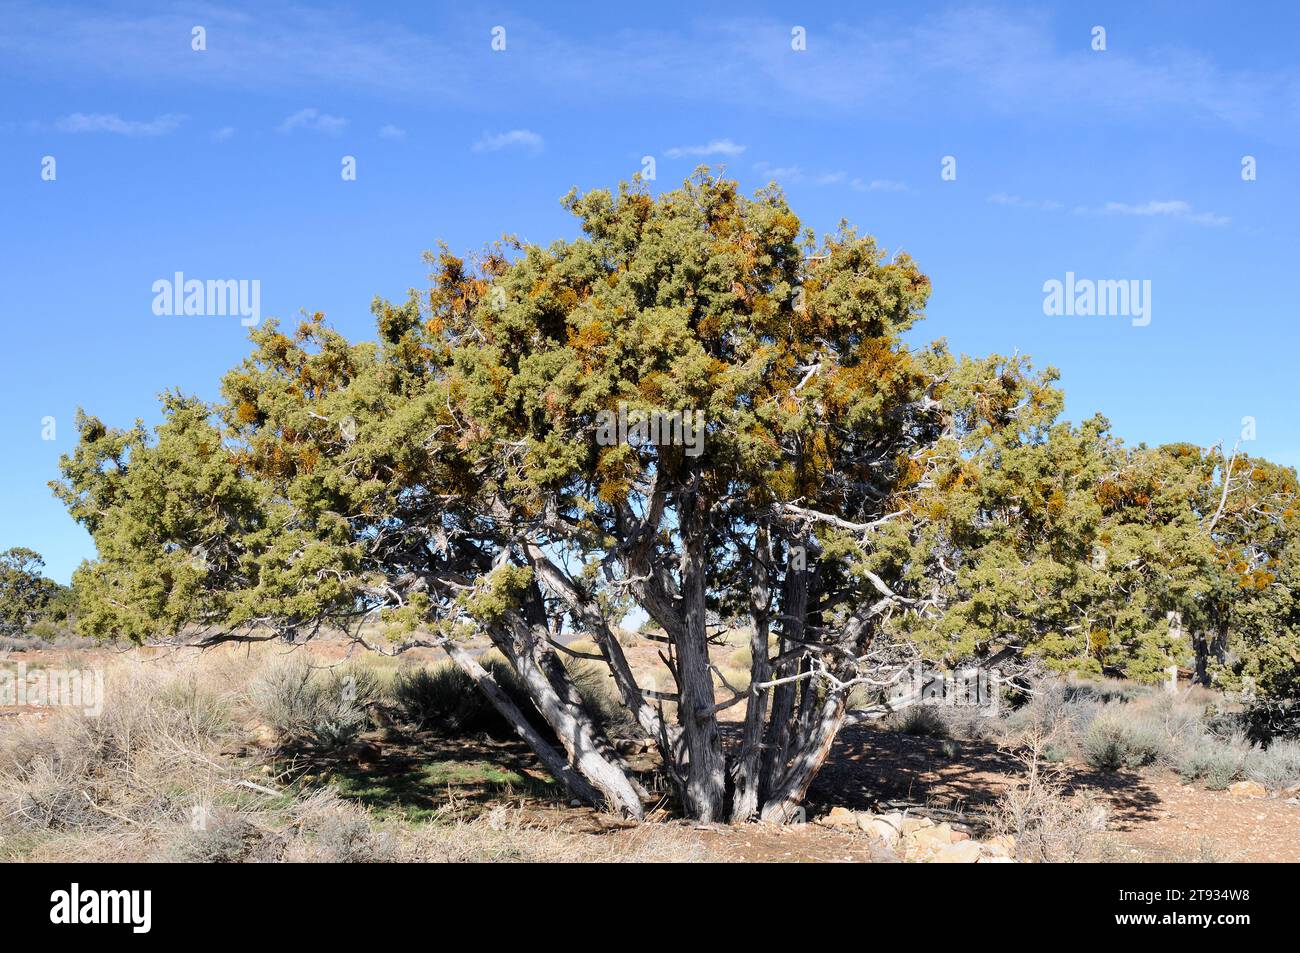 Utah juniper (Juniperus osteosperma) is a shrub or small tree native to southwestern USA. Specimen affected by juniper dwarf mistletoe (Arceuthobium o Stock Photo